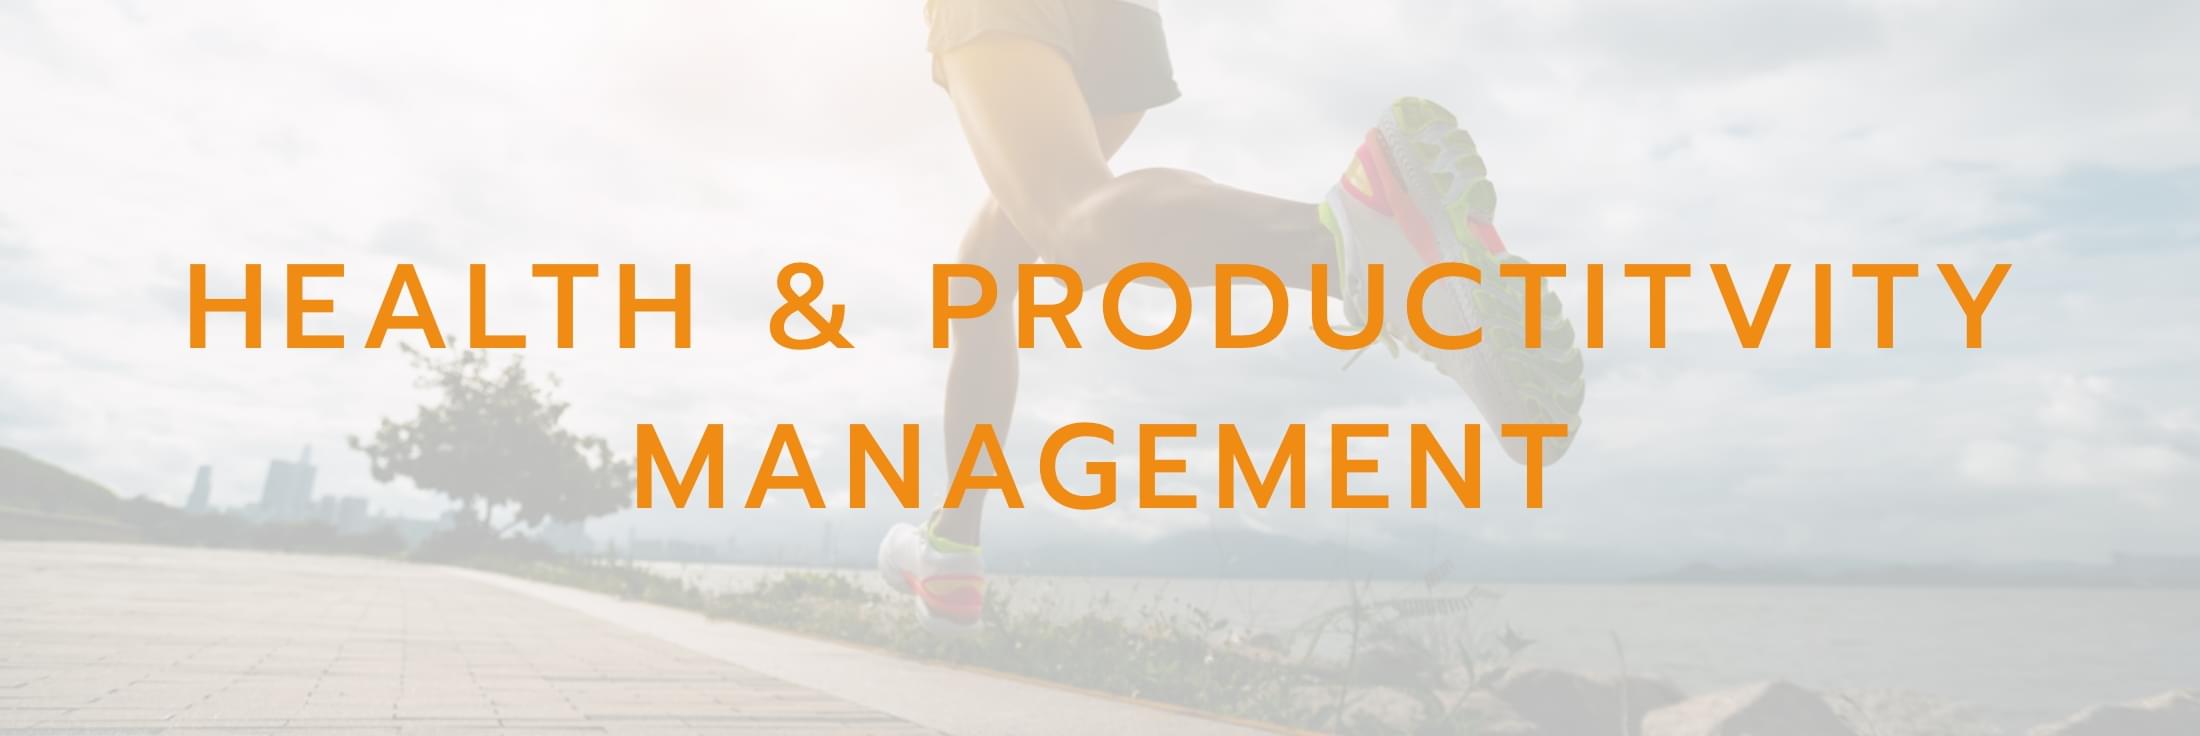 Health & productivity management